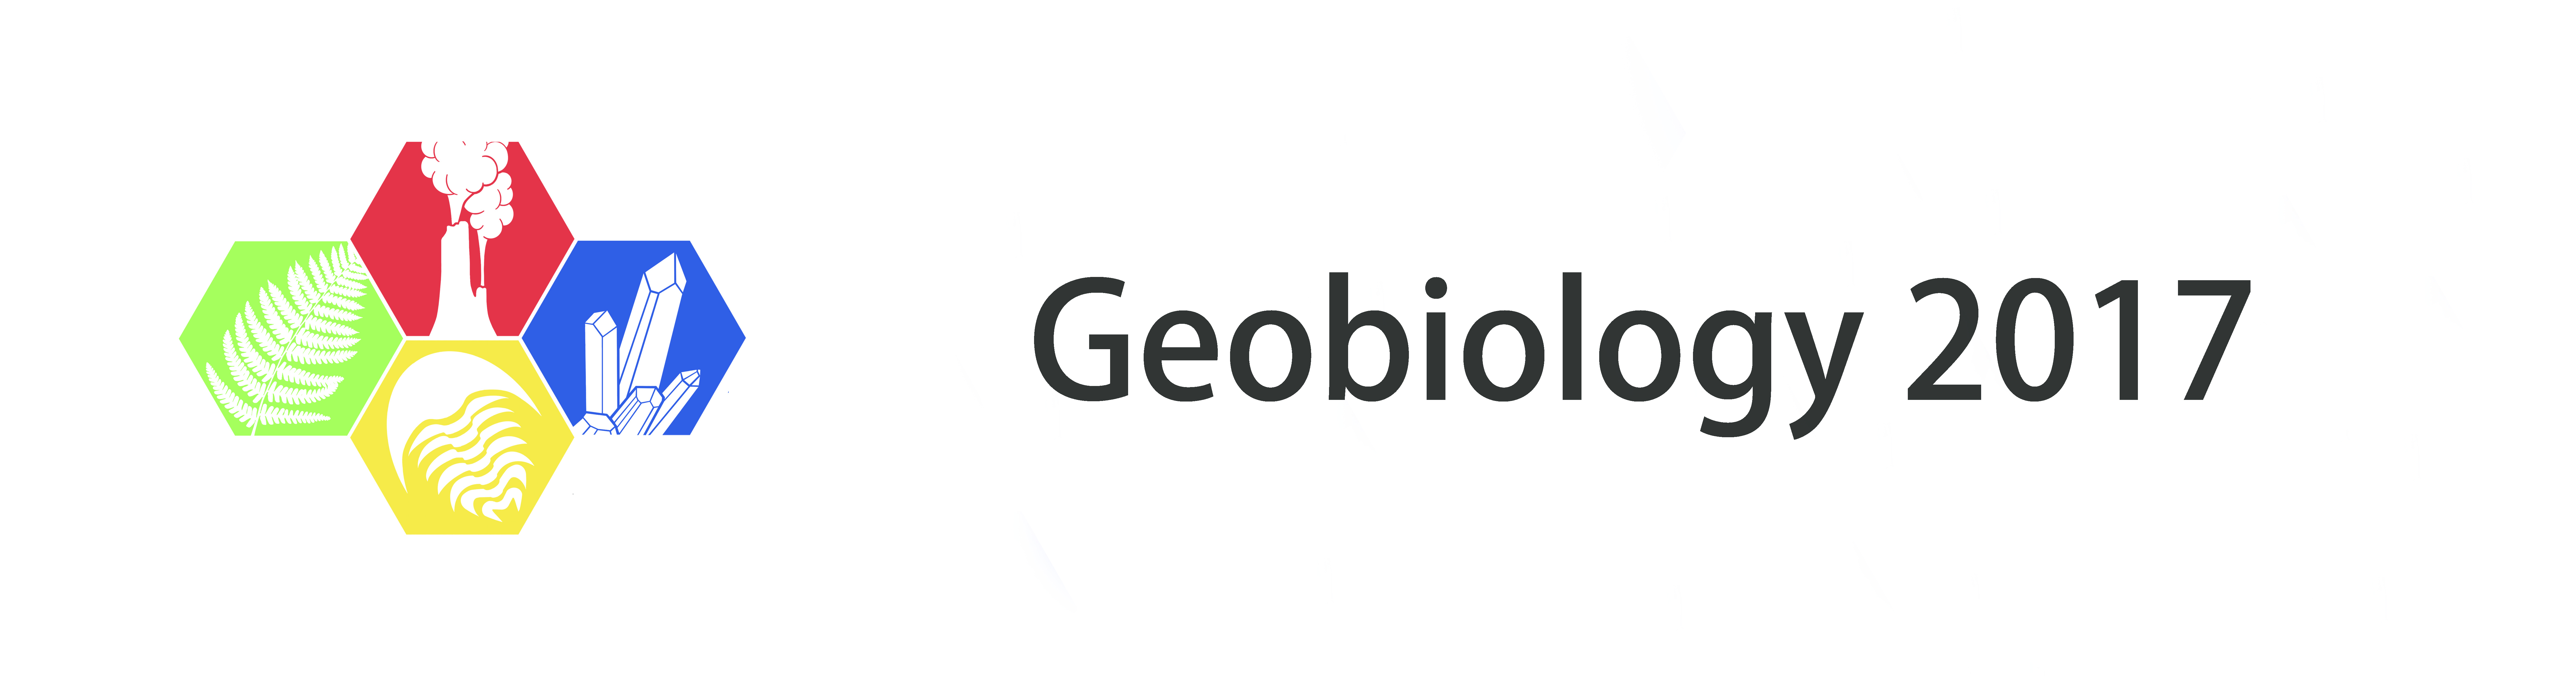 Geobiology 2017 Logo